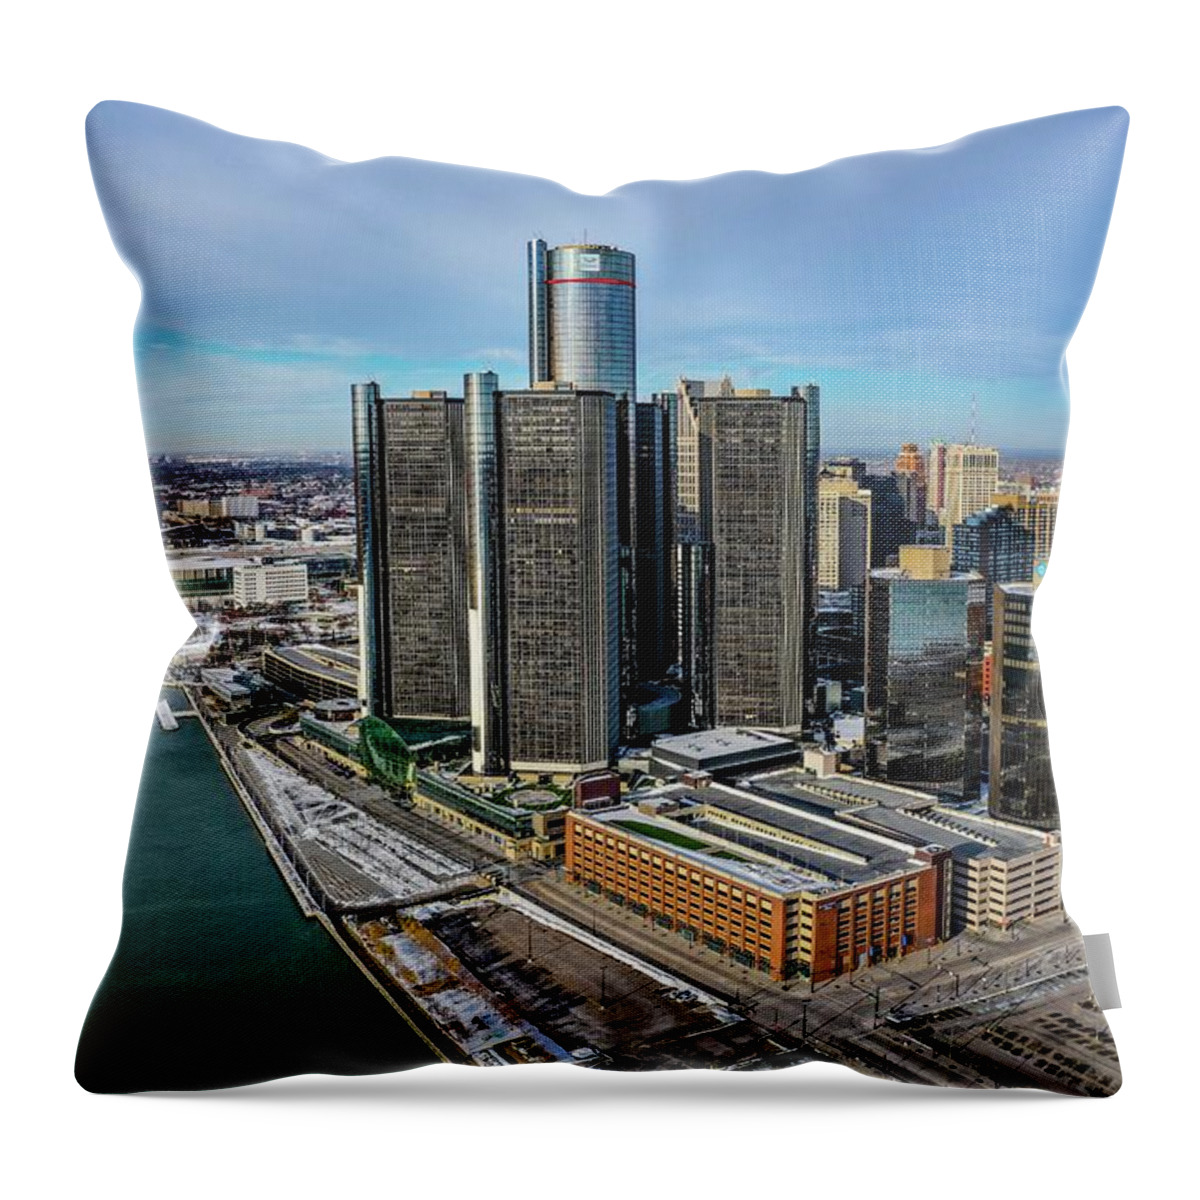 Detroit Throw Pillow featuring the photograph Detroit Ren Cen DJI_0475 by Michael Thomas